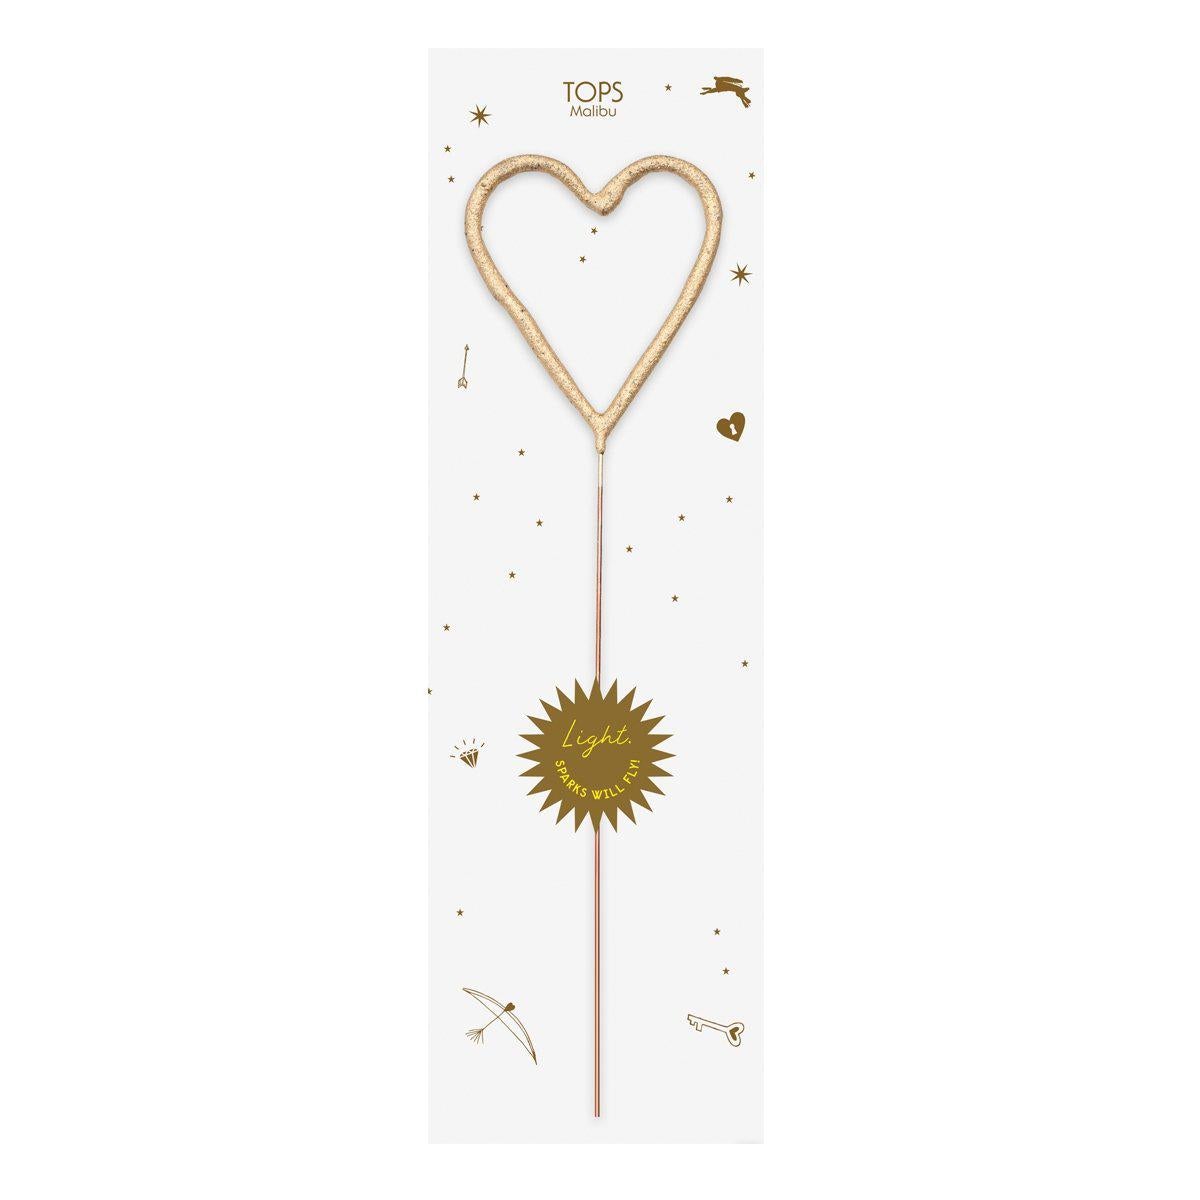 Big Golden Sparkler Wand Heart-Grocery-Eclipse Chocolate